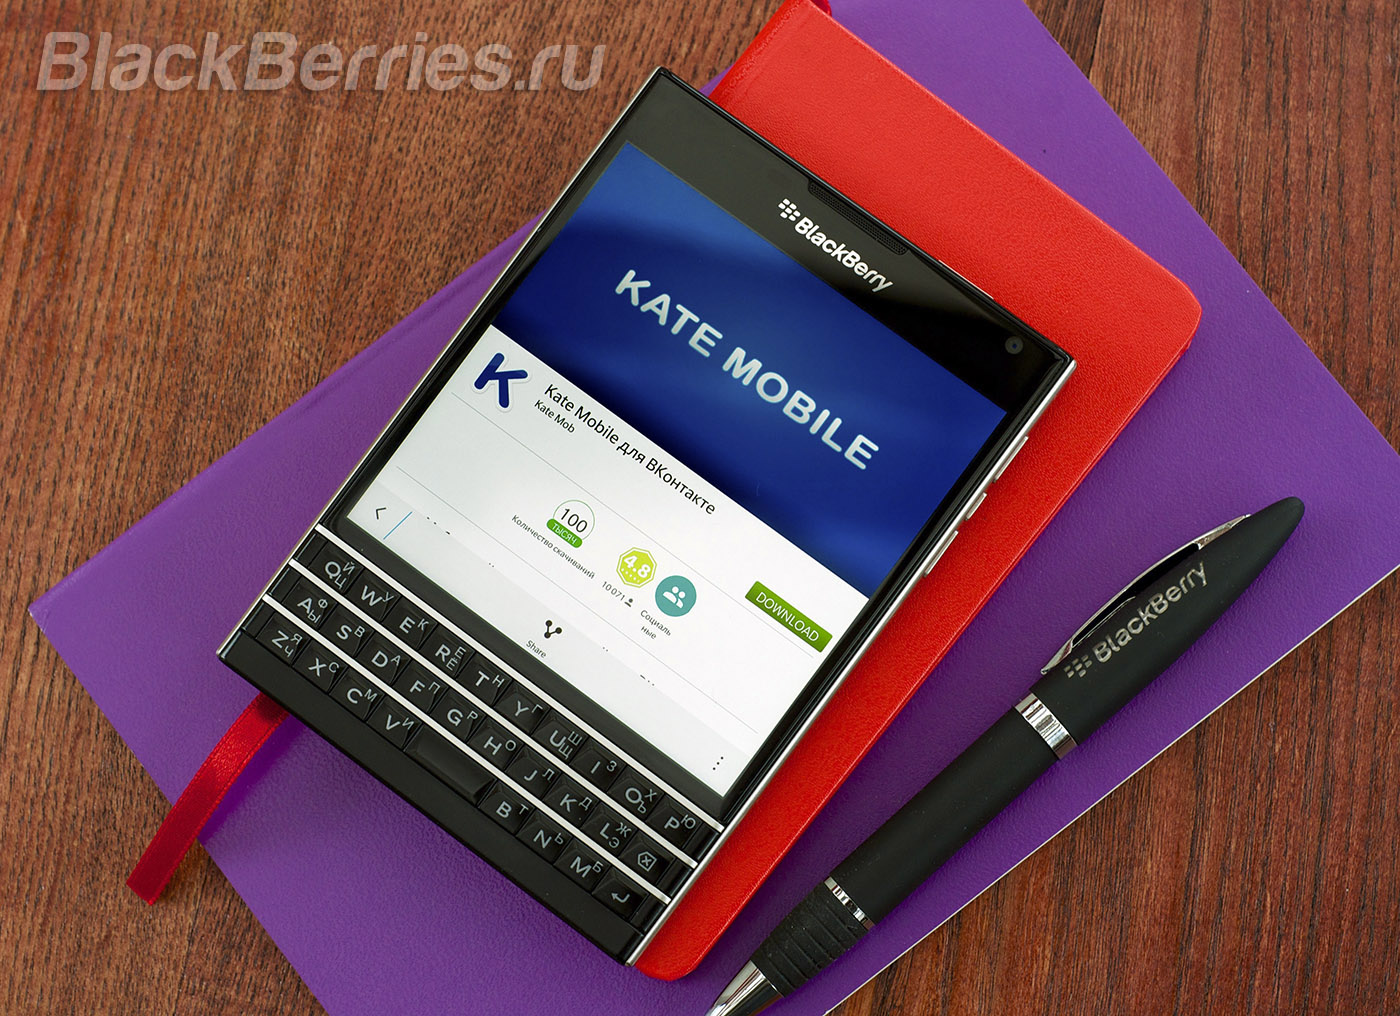 BlackBerry-Passport-Kate-Mobile-GP